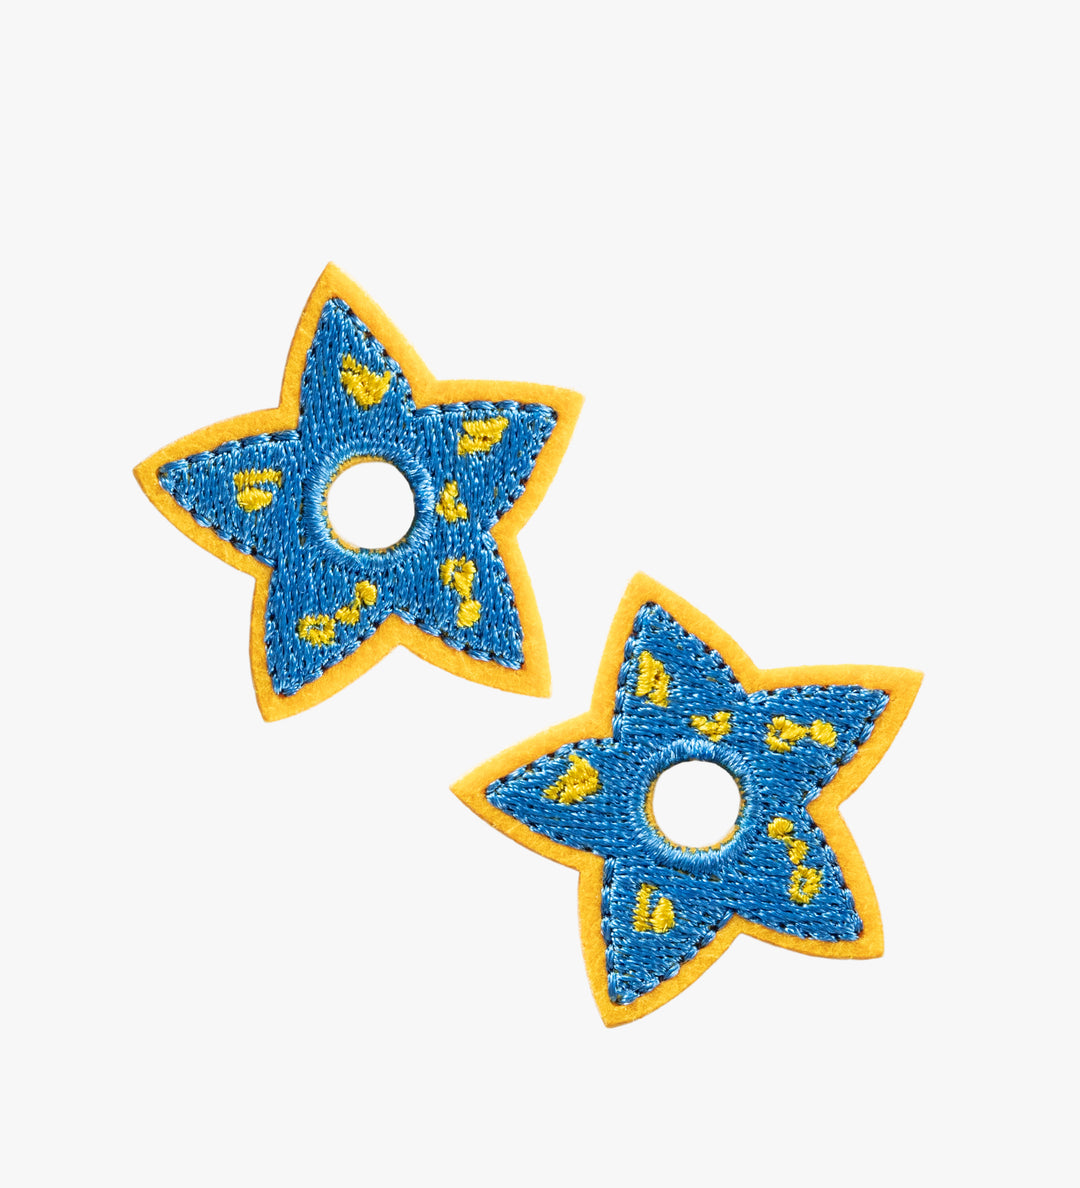 C7skates Celestial Star Mini Roller Skate Lace Charm Set of 4 in space blue